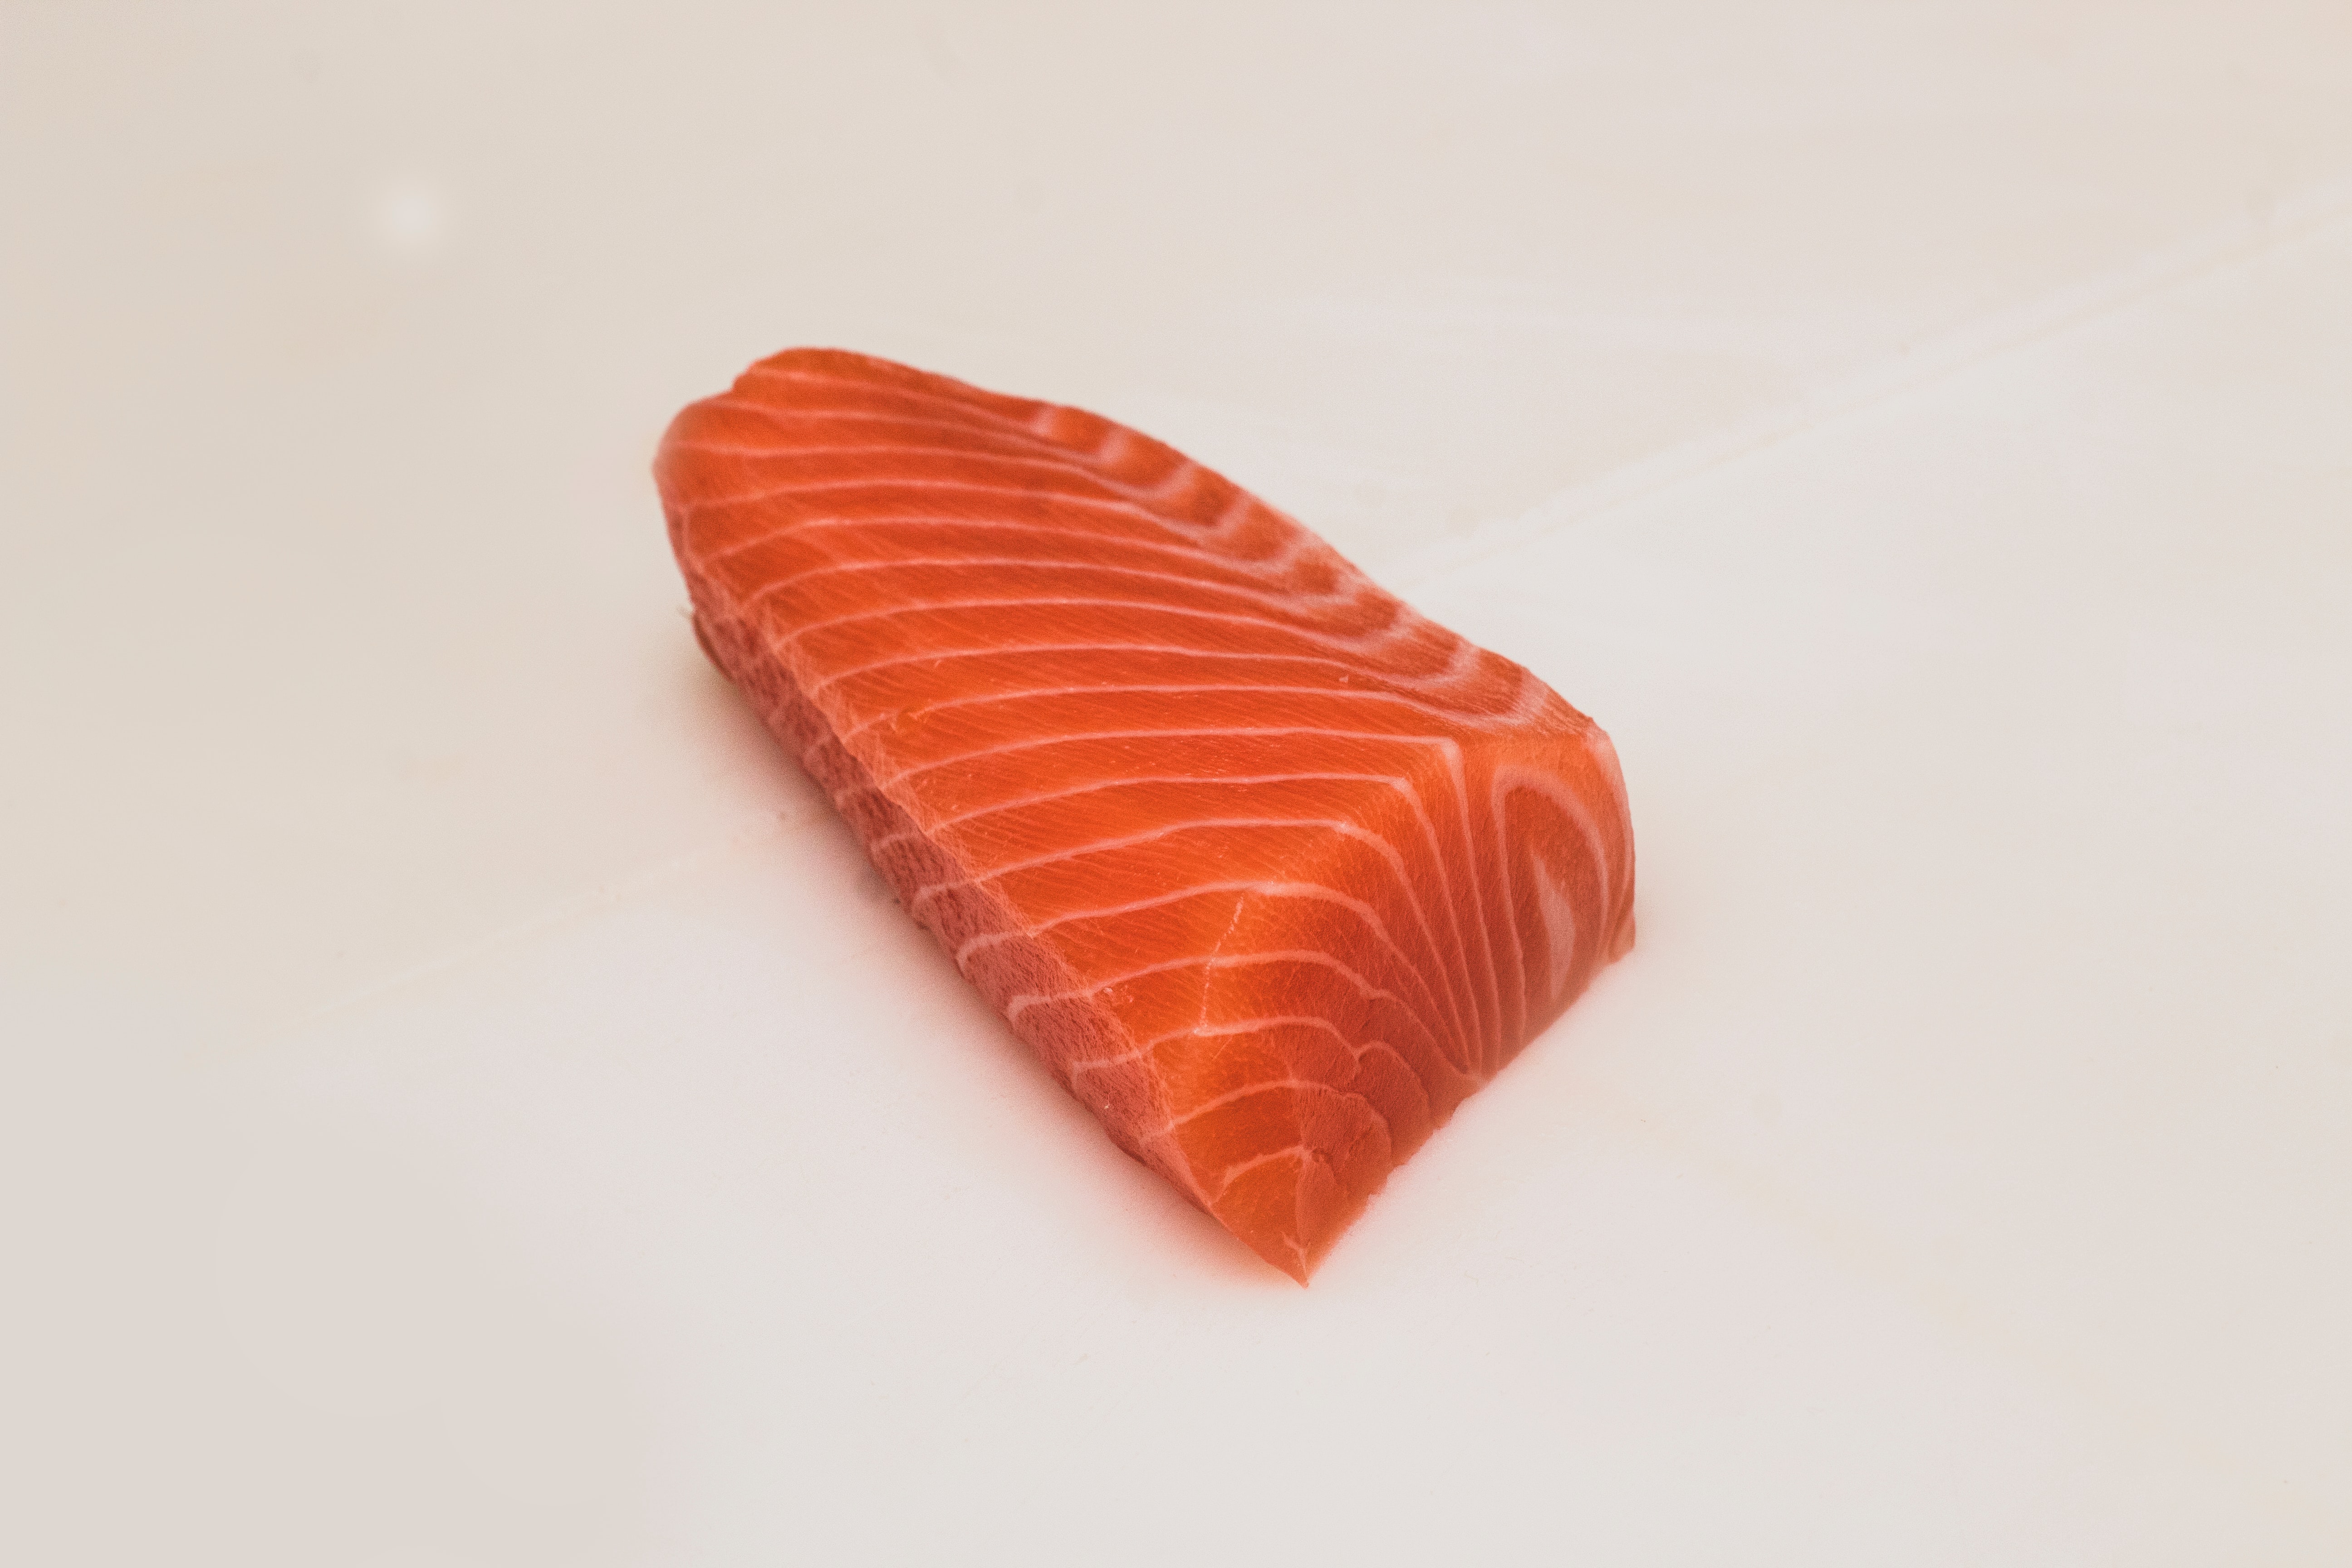 Salmon representing a source of Vitamin D3